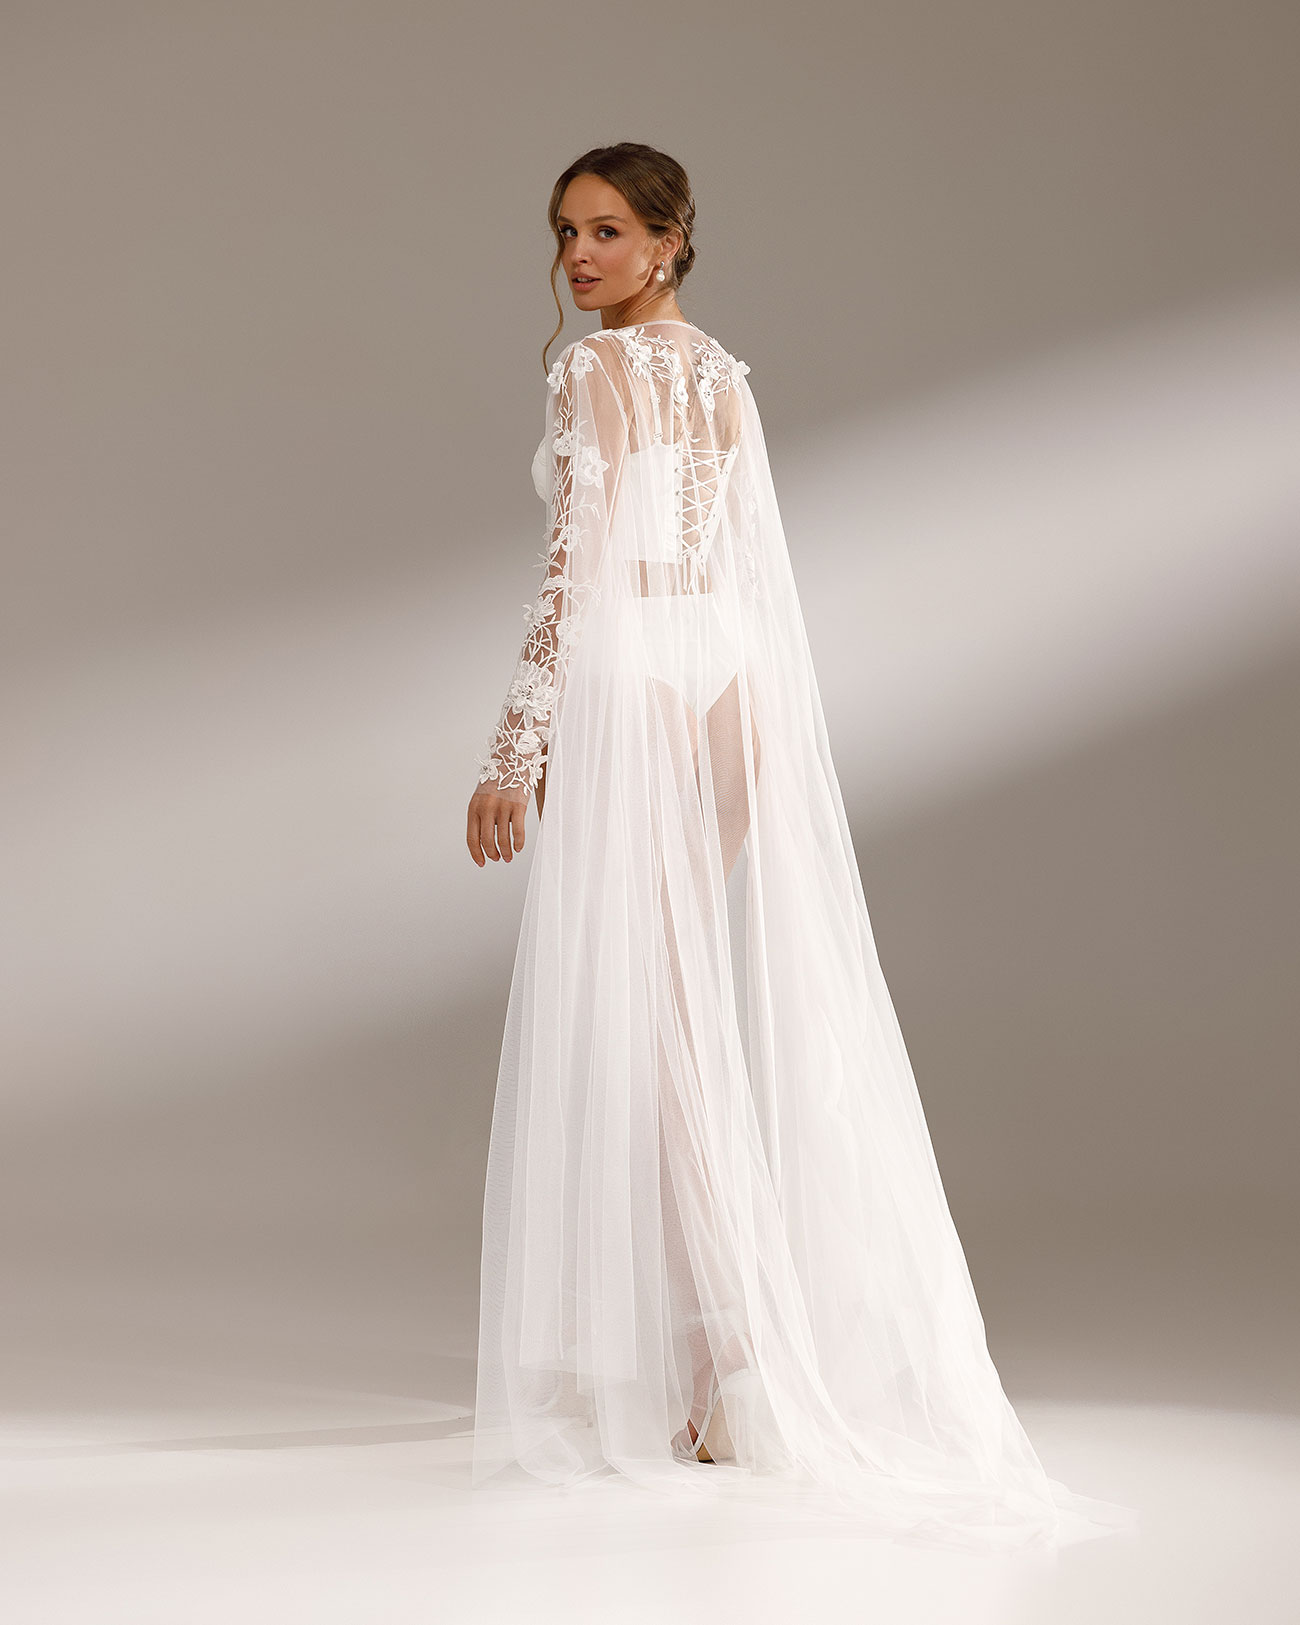 Nola Grey Luxury Bridal Wear Brides Wedding Dresses Veils1